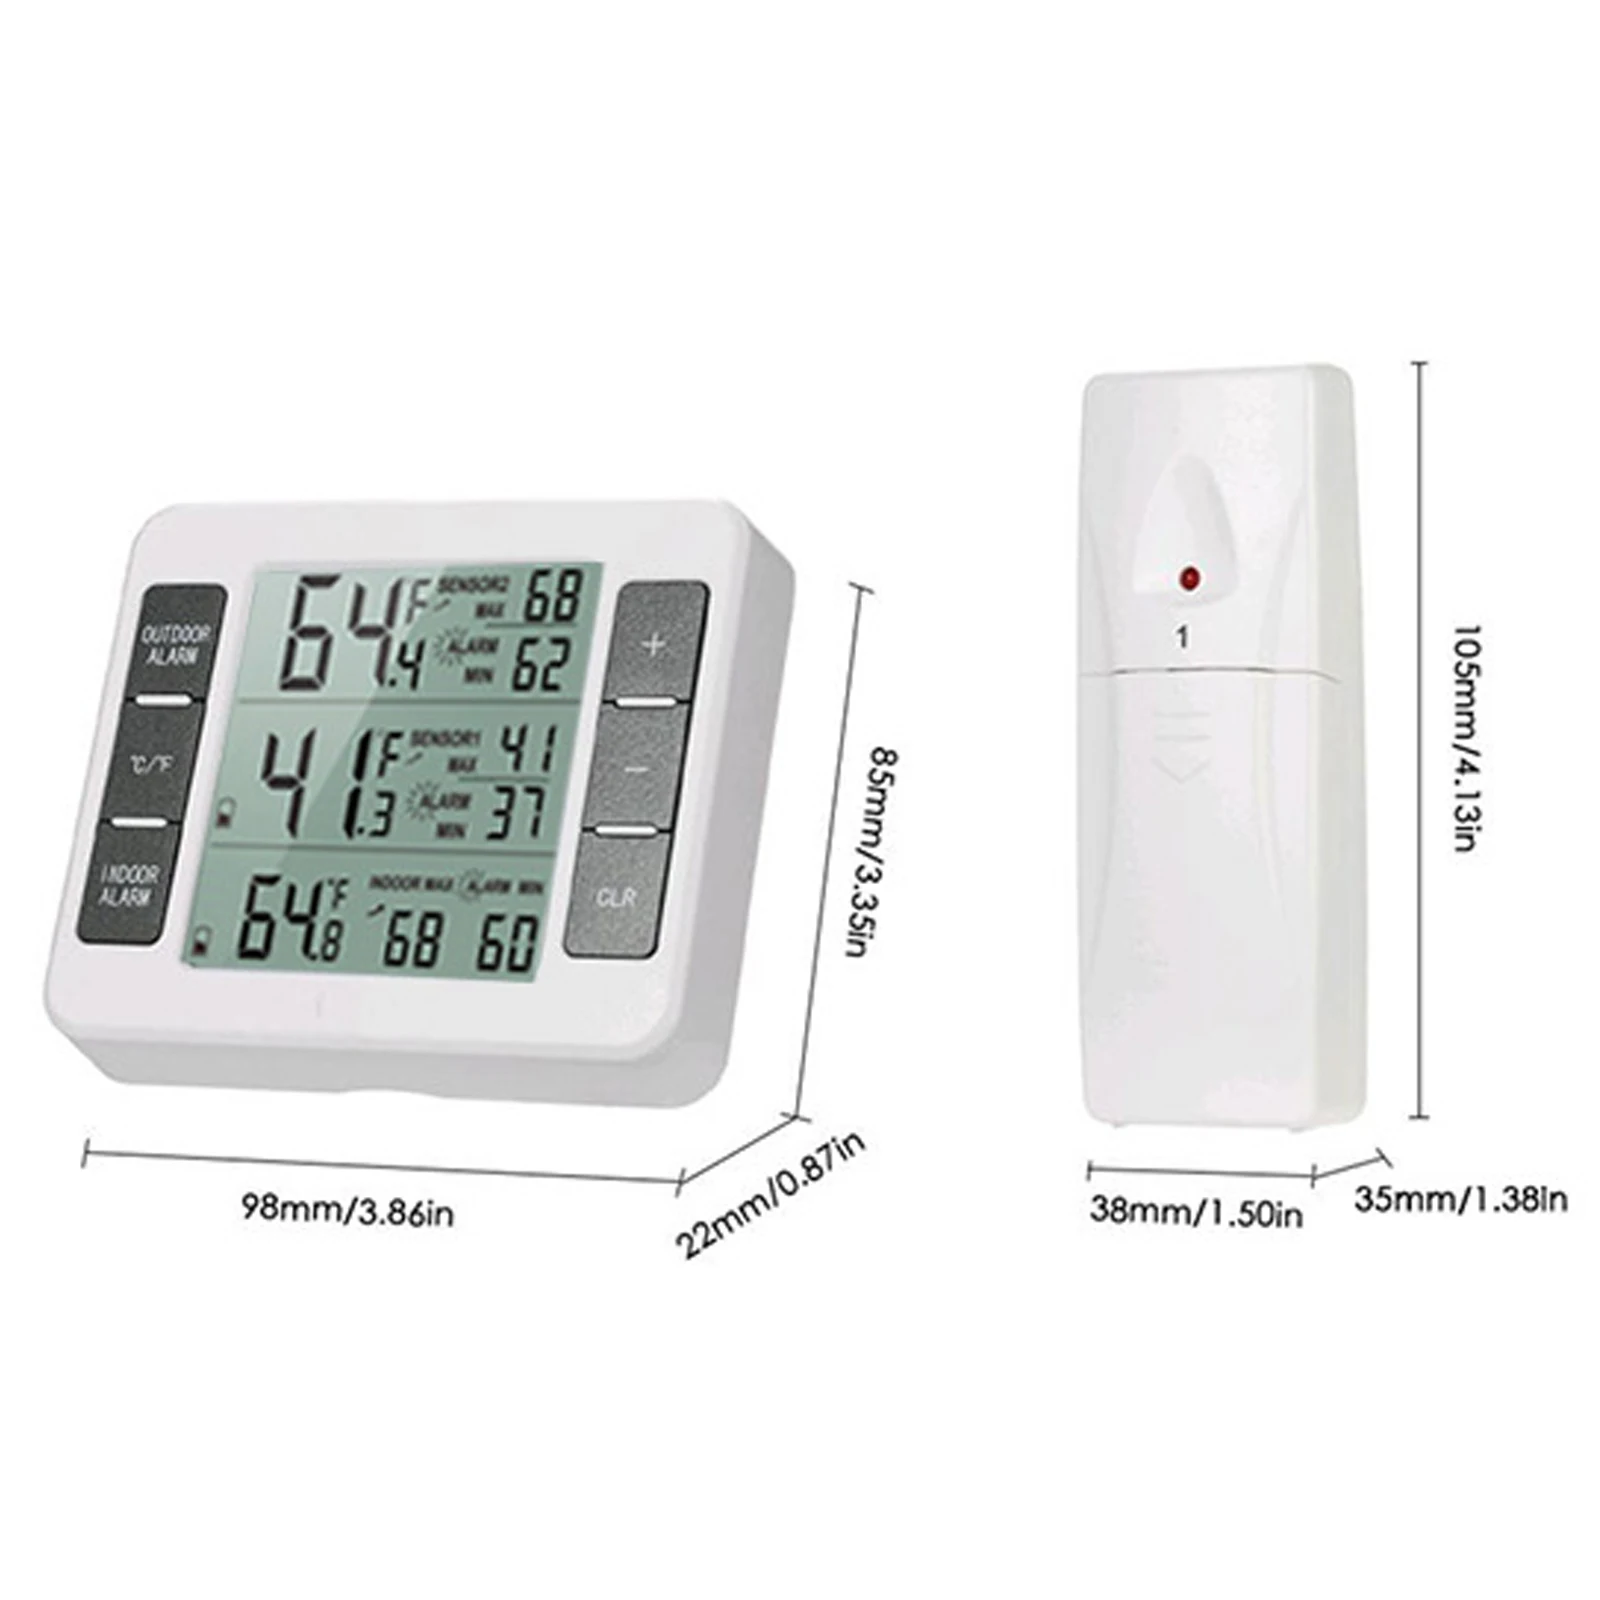 https://ae01.alicdn.com/kf/S969c50b1e2584261bbe1504da8a31f13o/Wireless-Digital-Freezer-Alarm-Thermometer-Fridge-Home-Indoor-Outdoor-2-Sensors-Thermometer-Clock-Gray-Battery-Powered.jpg